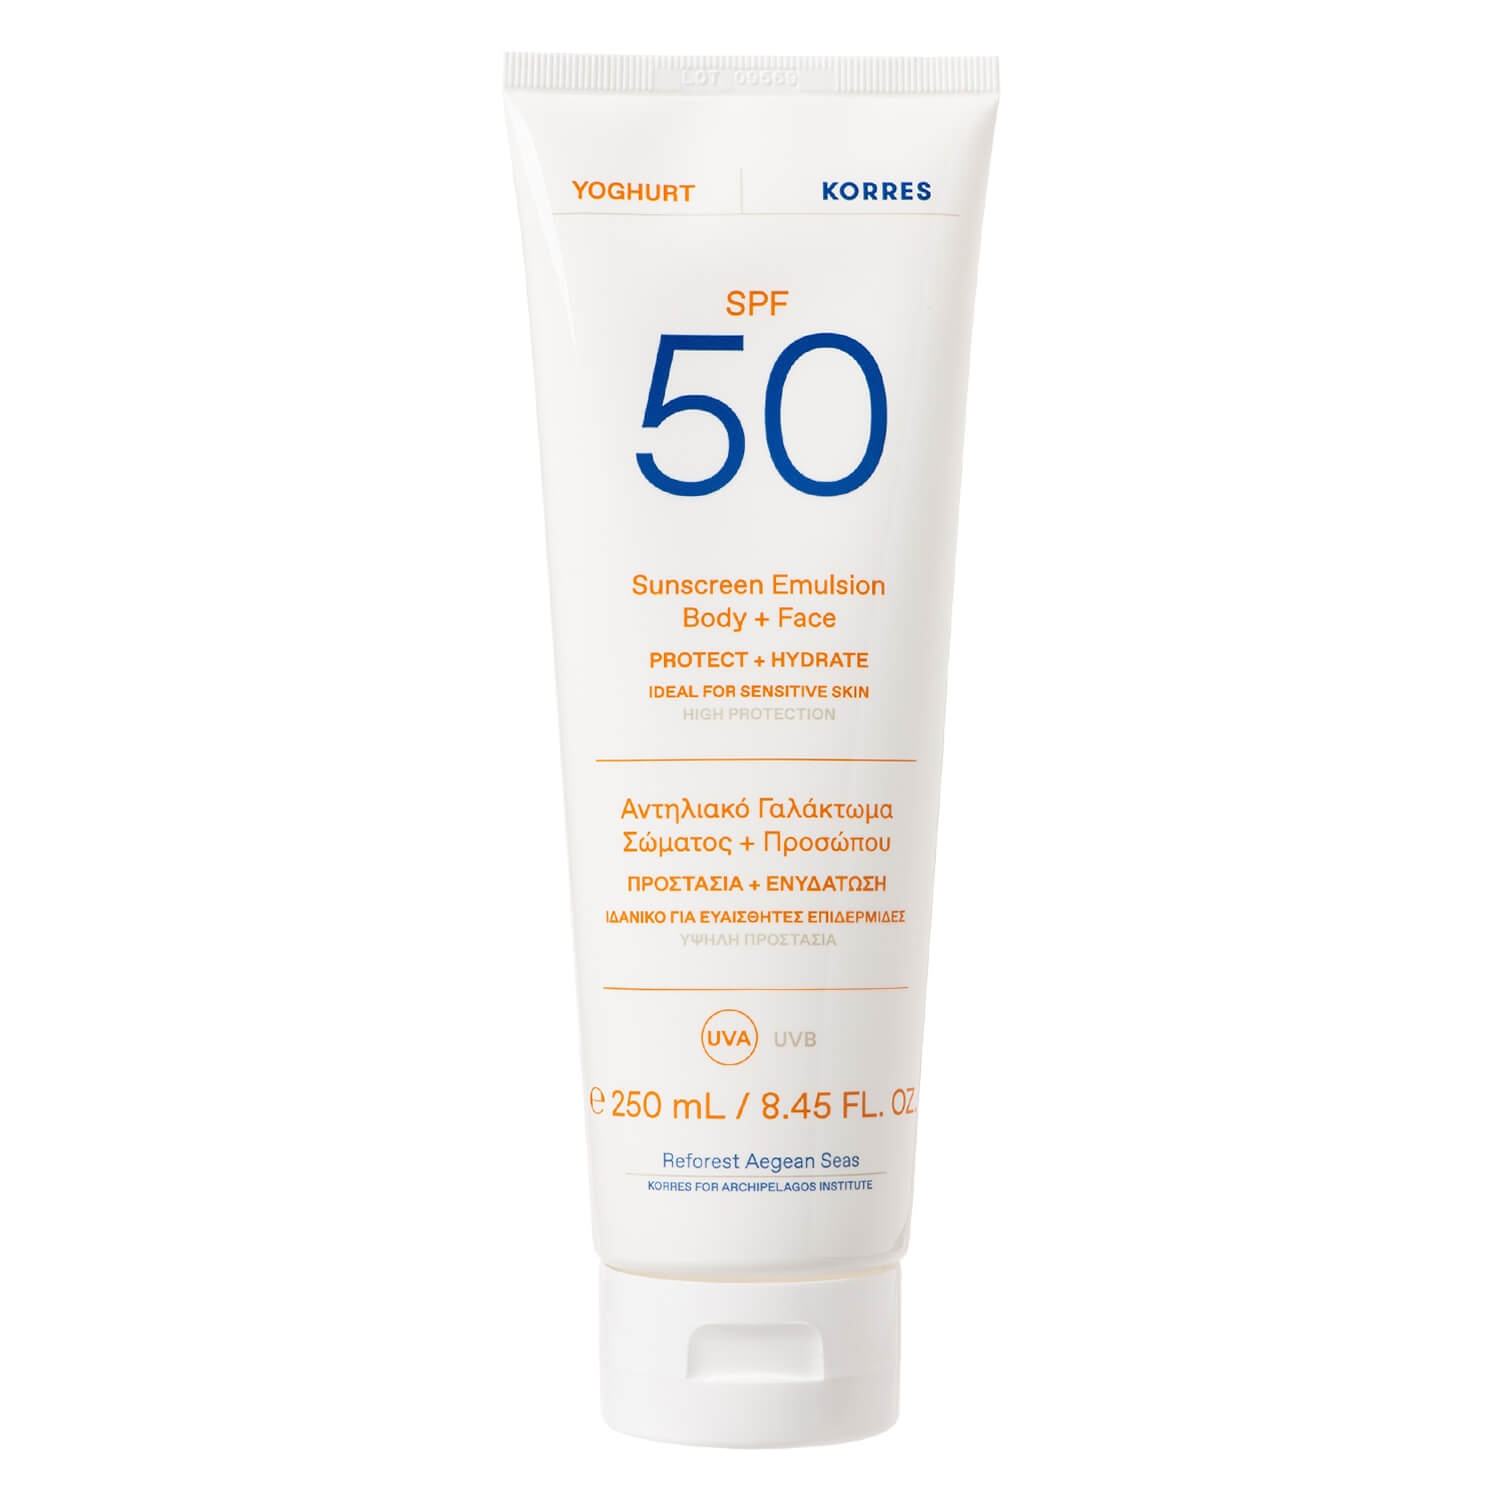 Produktbild von Korres Care - Yoghurt Sunscreen Emulsion Body + Face SPF50